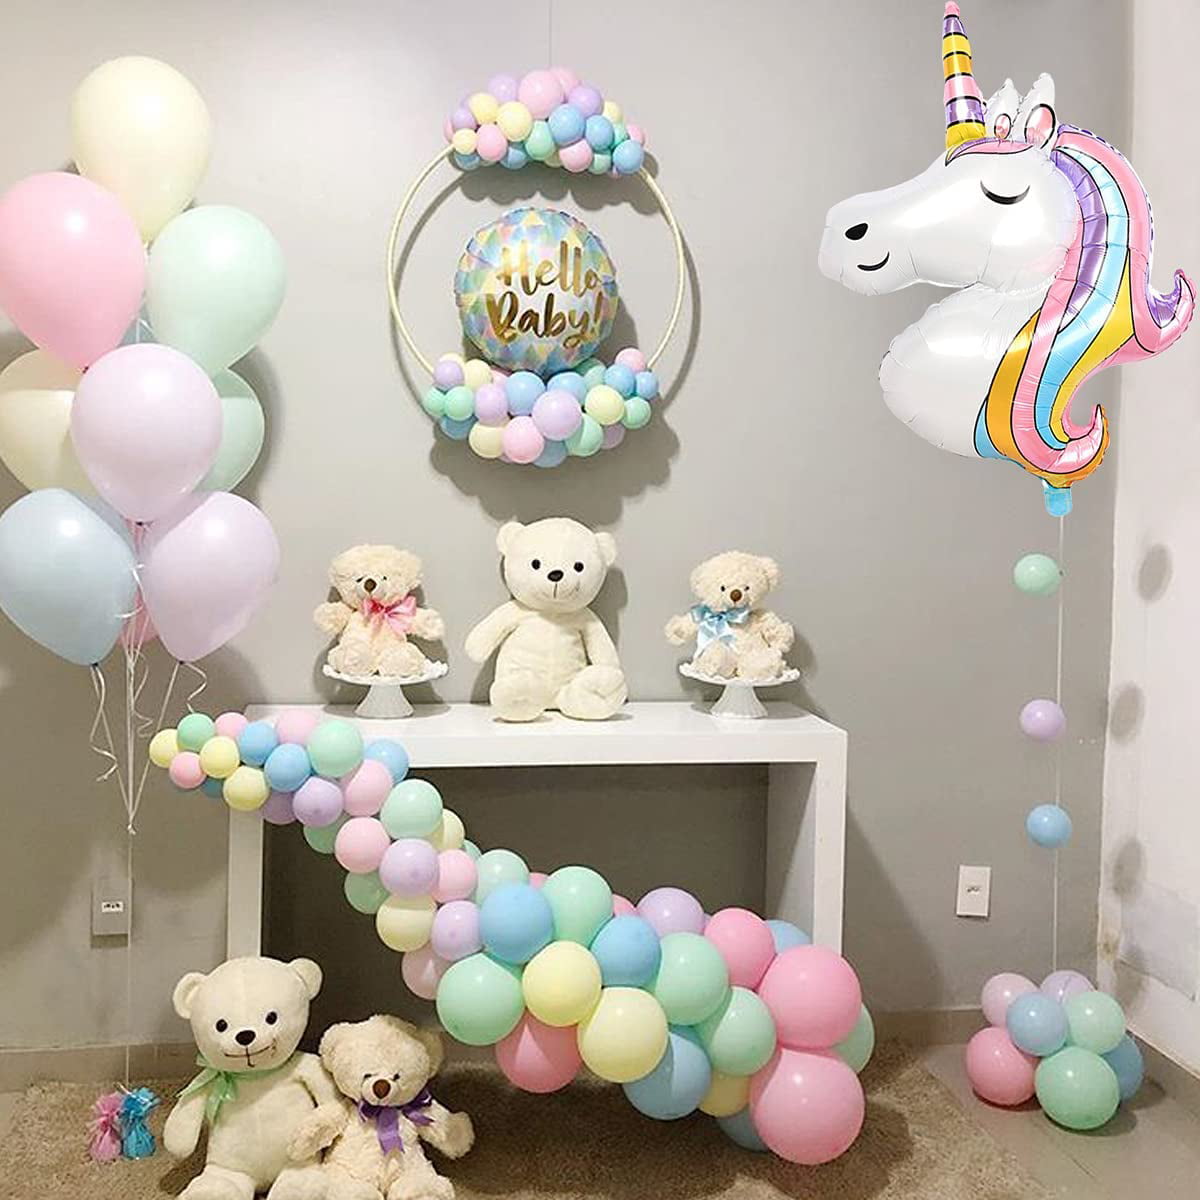 Care Bears Birthday Party Ideas, Photo 11 of 12